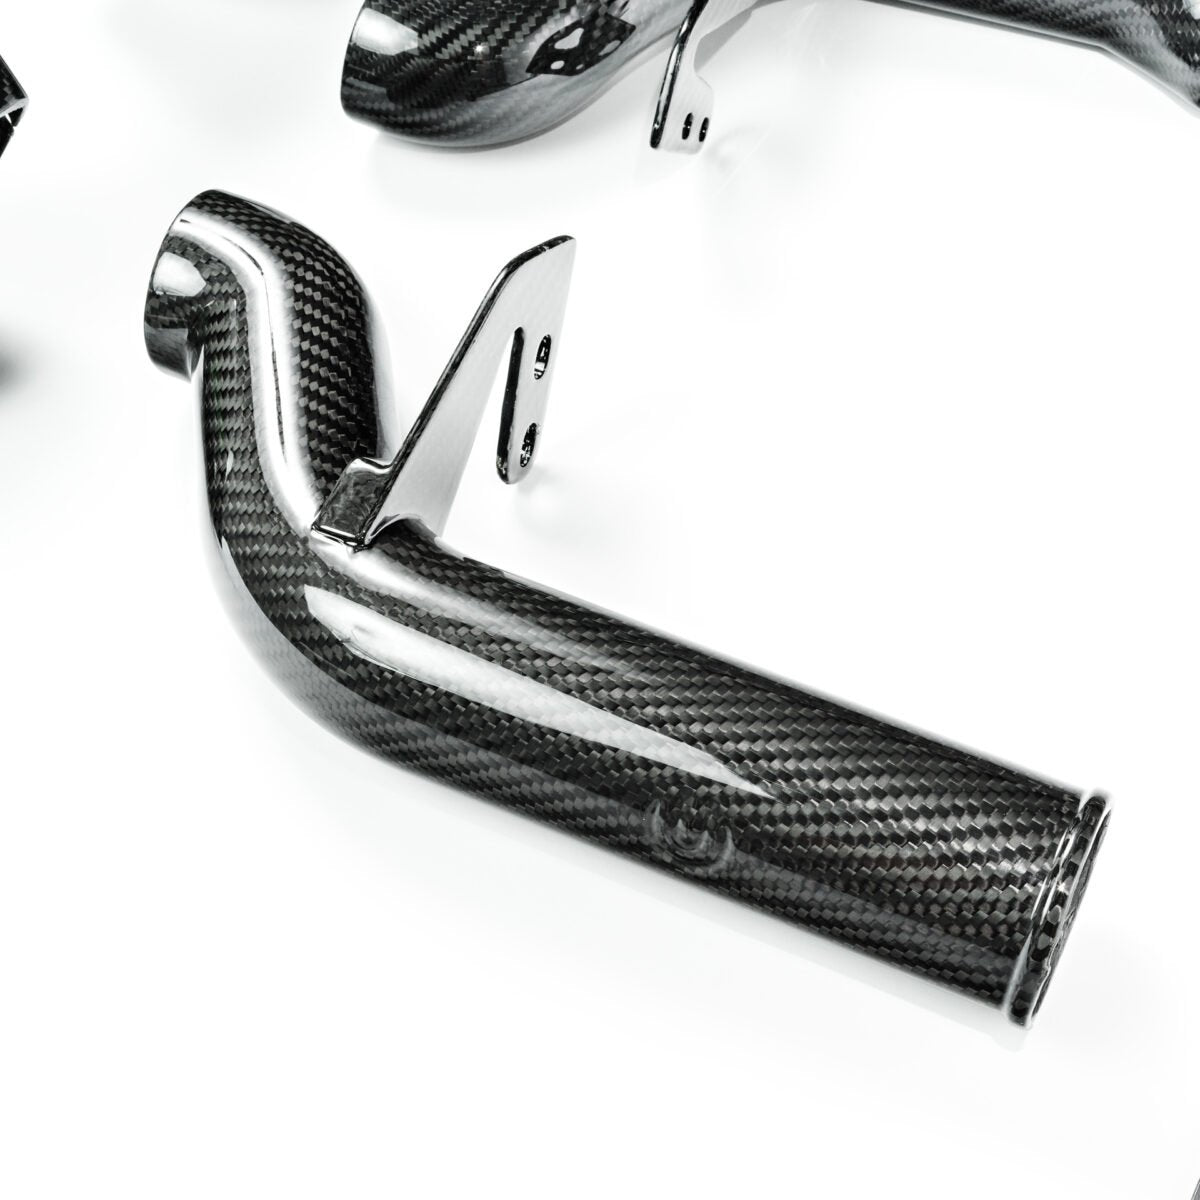 Unplugged Performance - Model S plaid Carbon Fiber Racing Brake Duct Kit (front) 2021+.